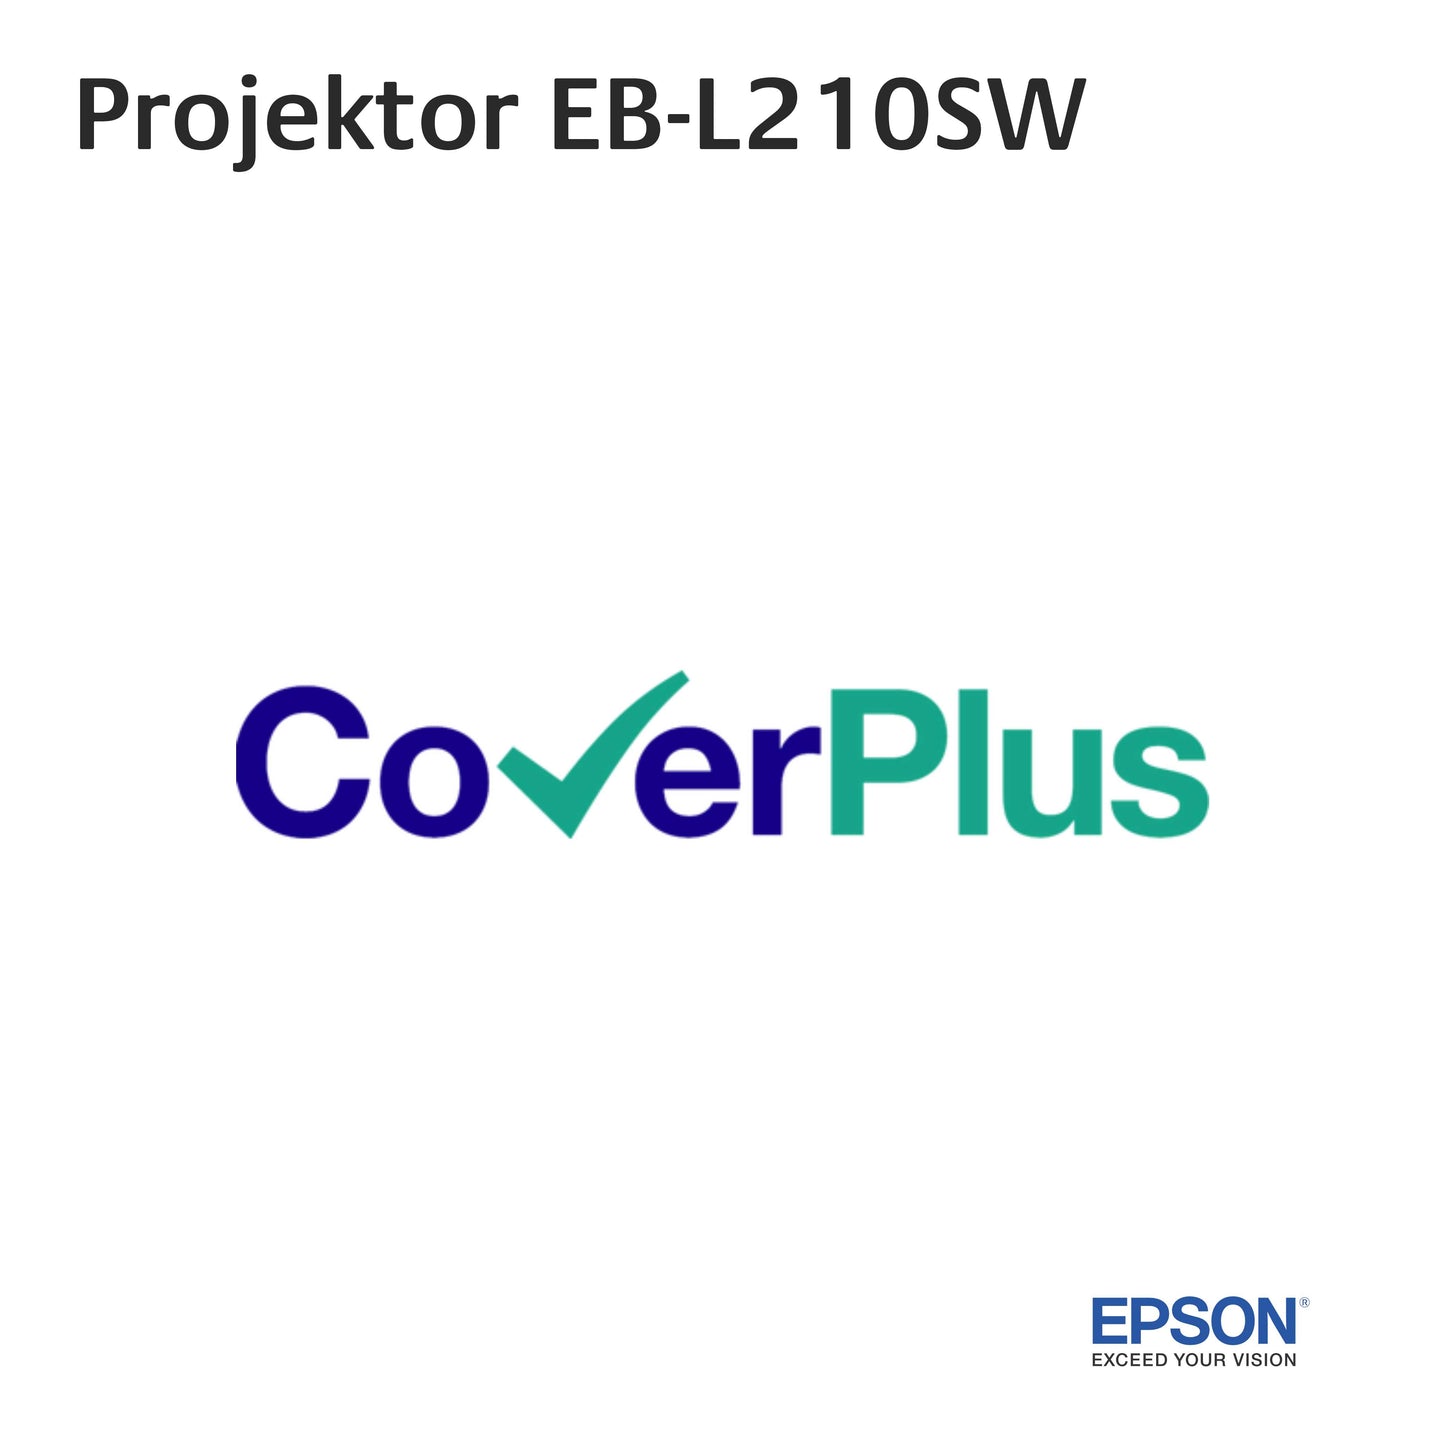 EPSON Projektor EB-L210SW